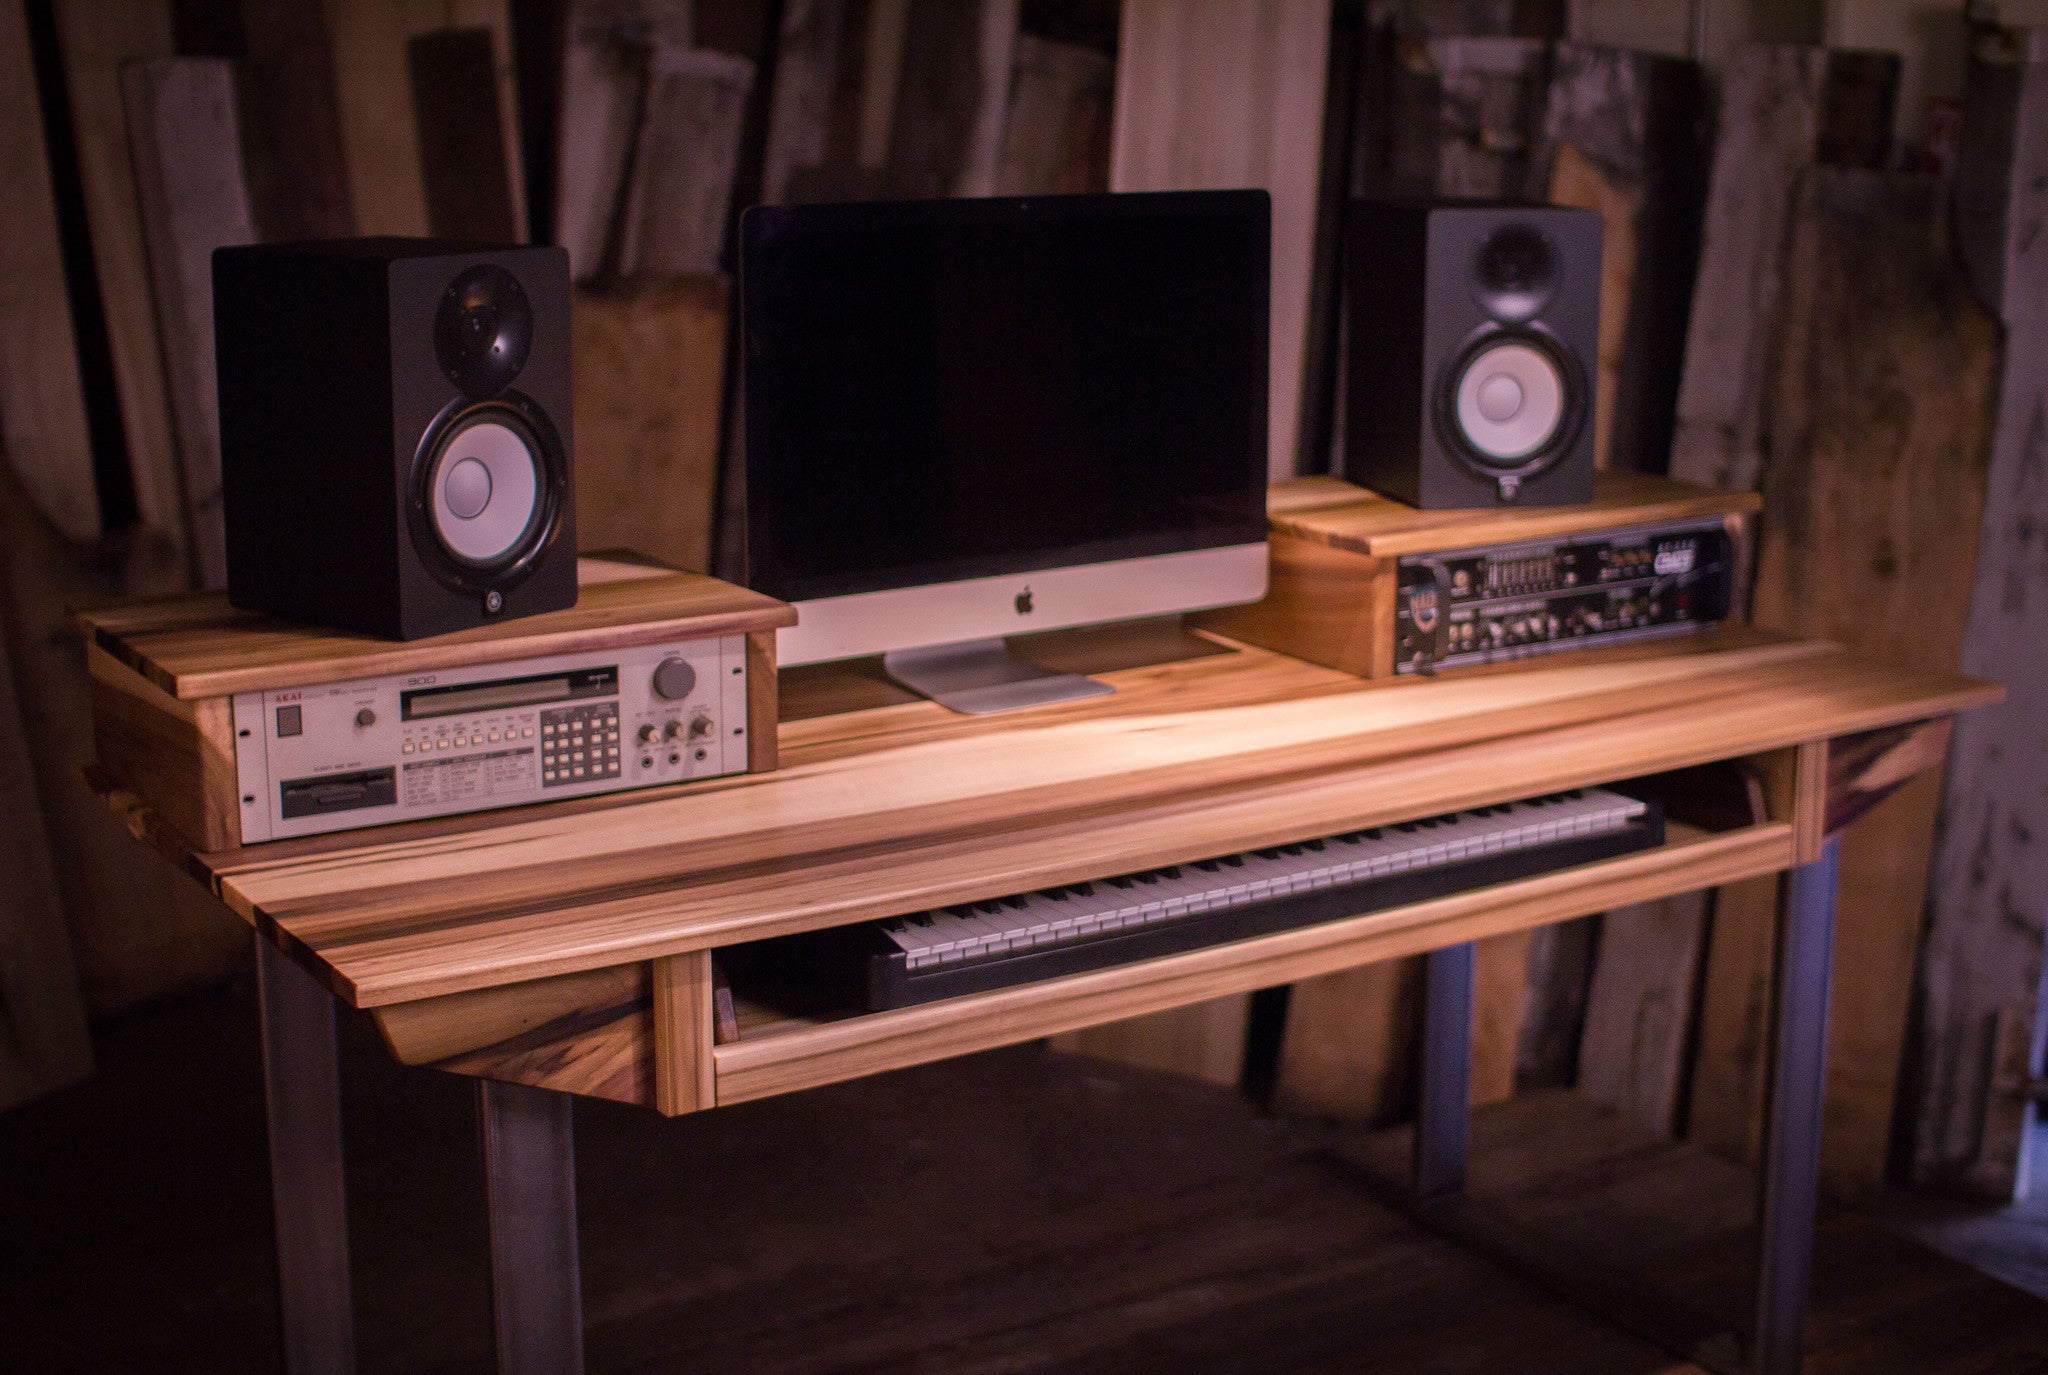 Monkwood SD61 Studio Desk for Audio / Video / Music / Film / Production